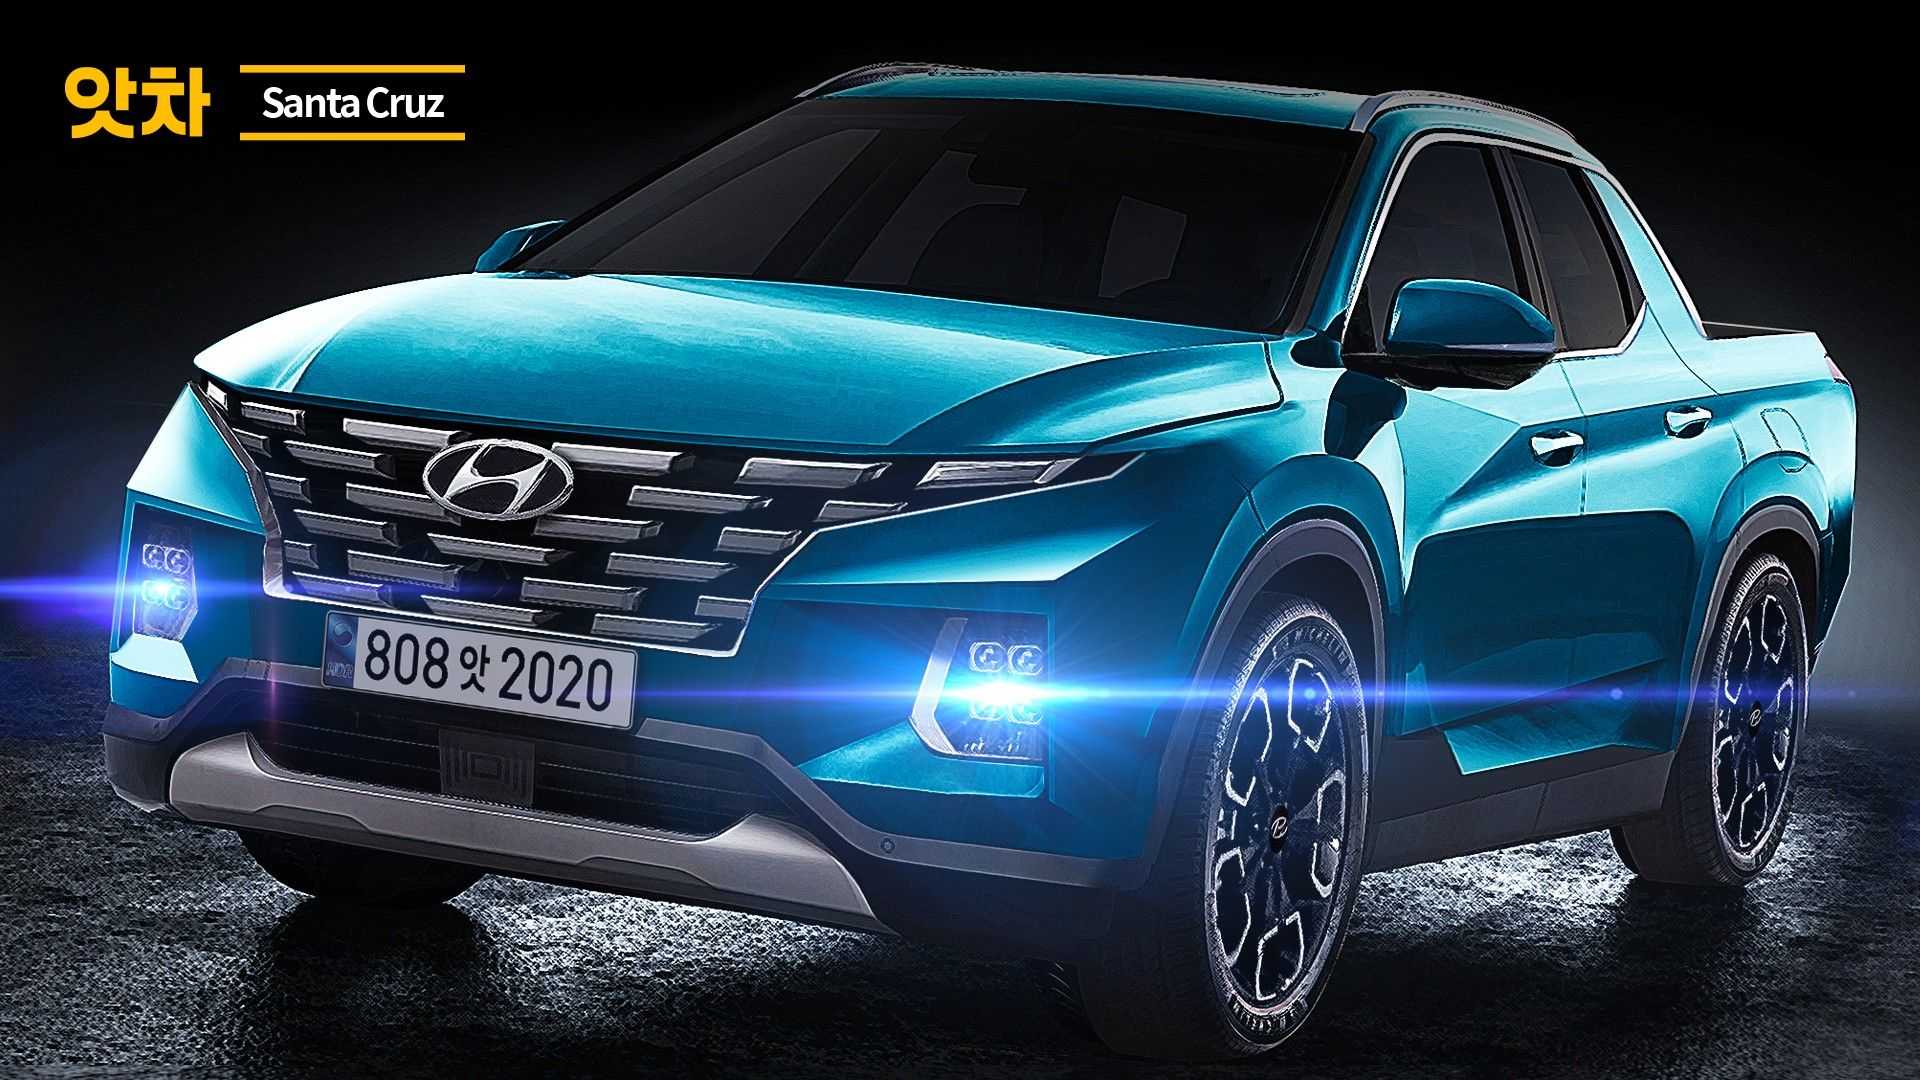 Check out the Entire Hyundai Santa Cruz Color Palette in New Render Roll autoevolution